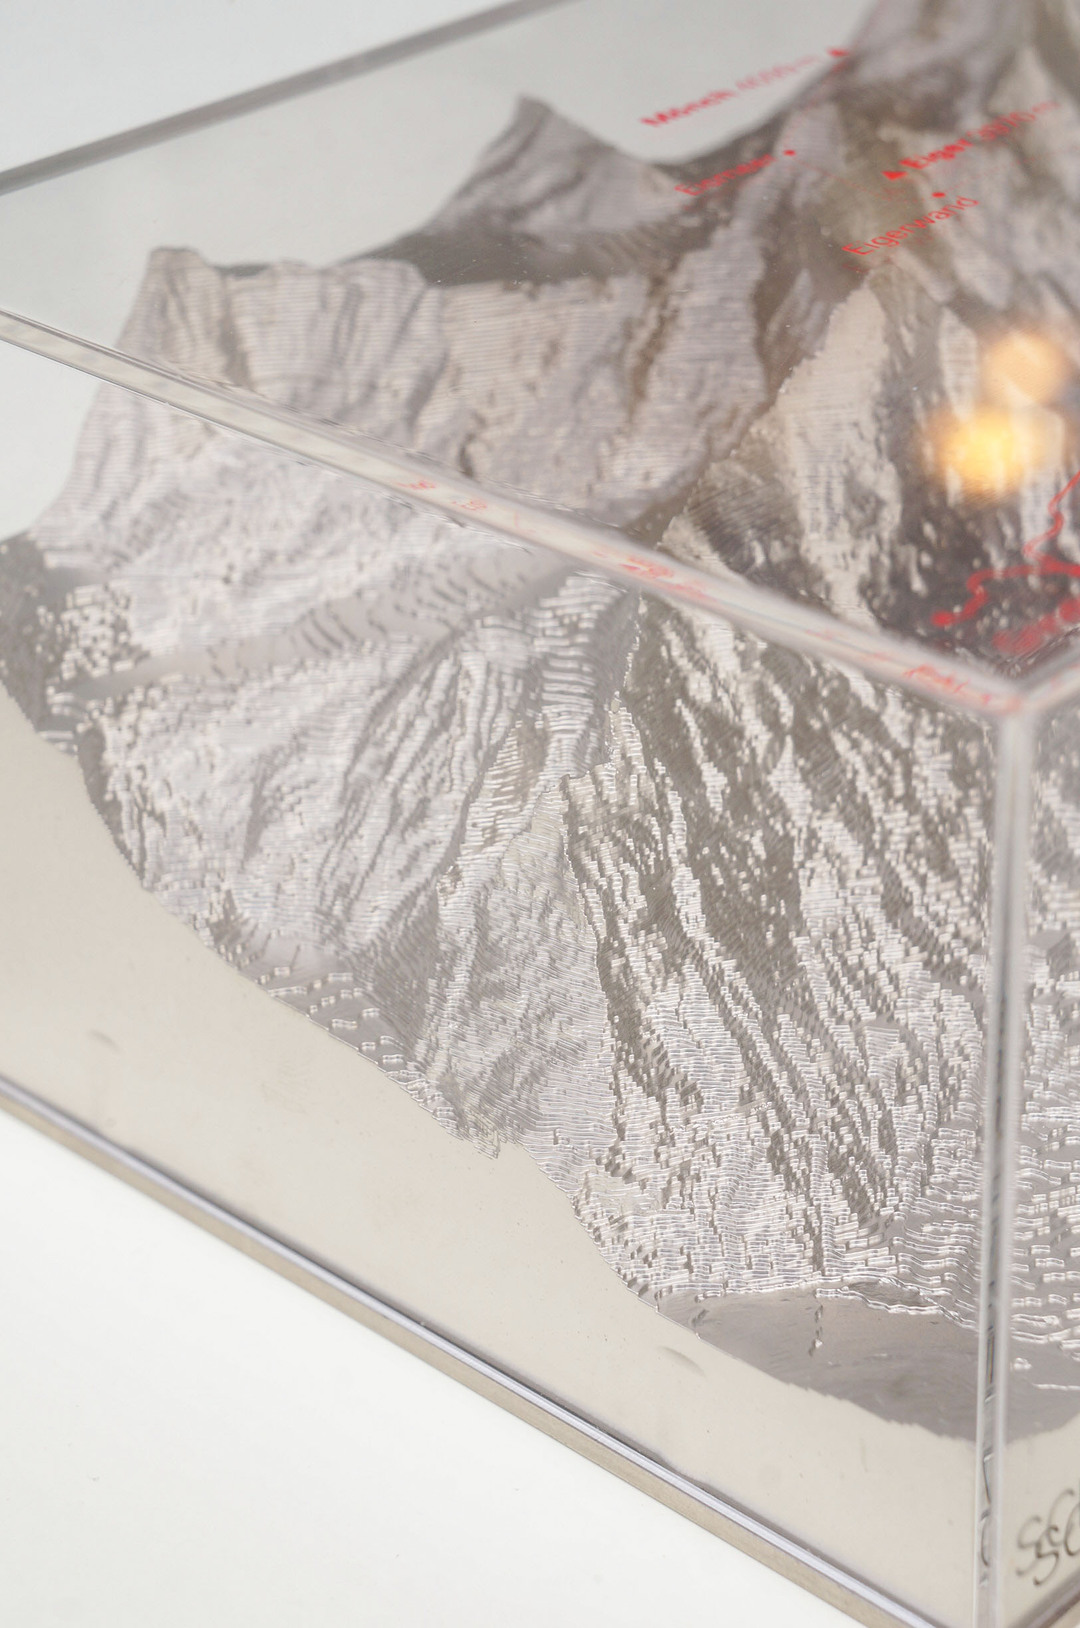 Swiss Reliorama Mountain Diorama Object Jungfrau Region/レリオラマ スイス製 精密山岳模型 ジオラマ 模型 オブジェ インテリア アイガー・メンヒ・ユングフラウ